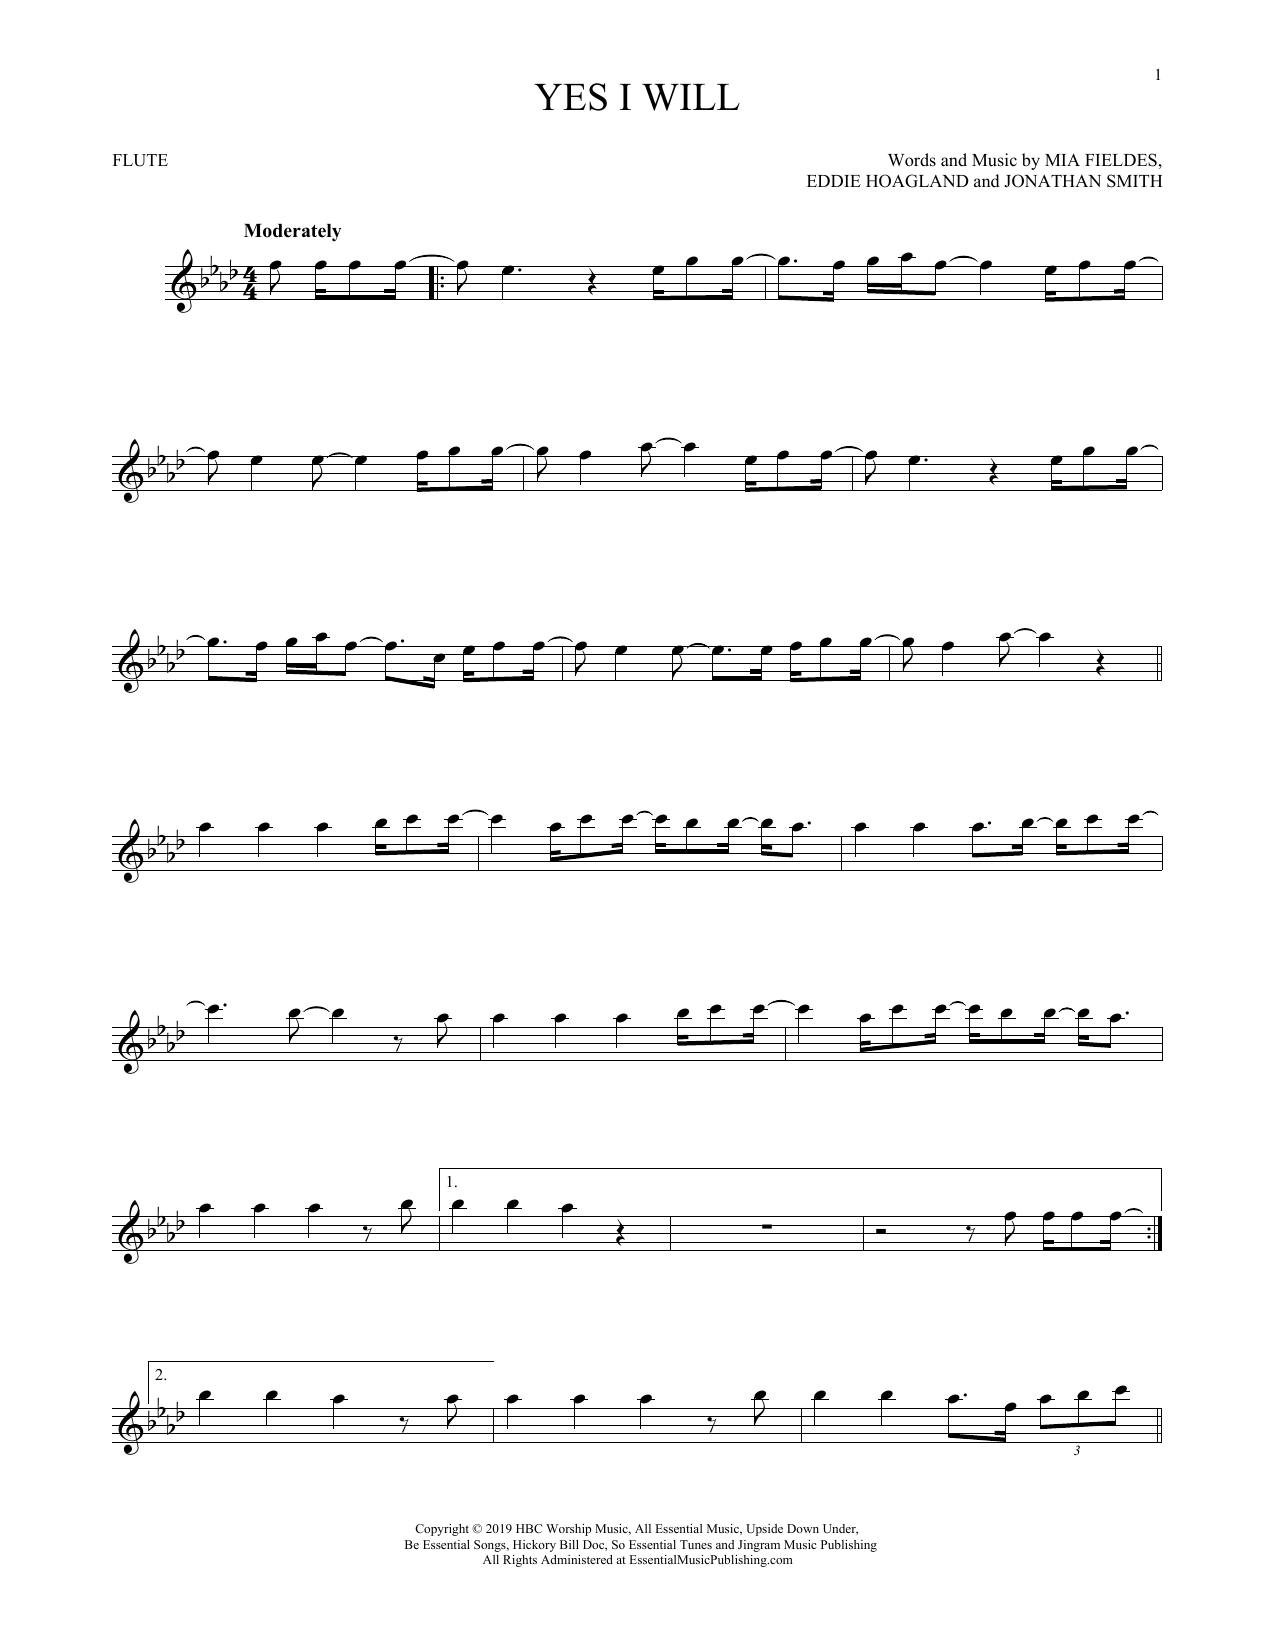 Vertical Worship Yes I Will sheet music notes printable PDF score